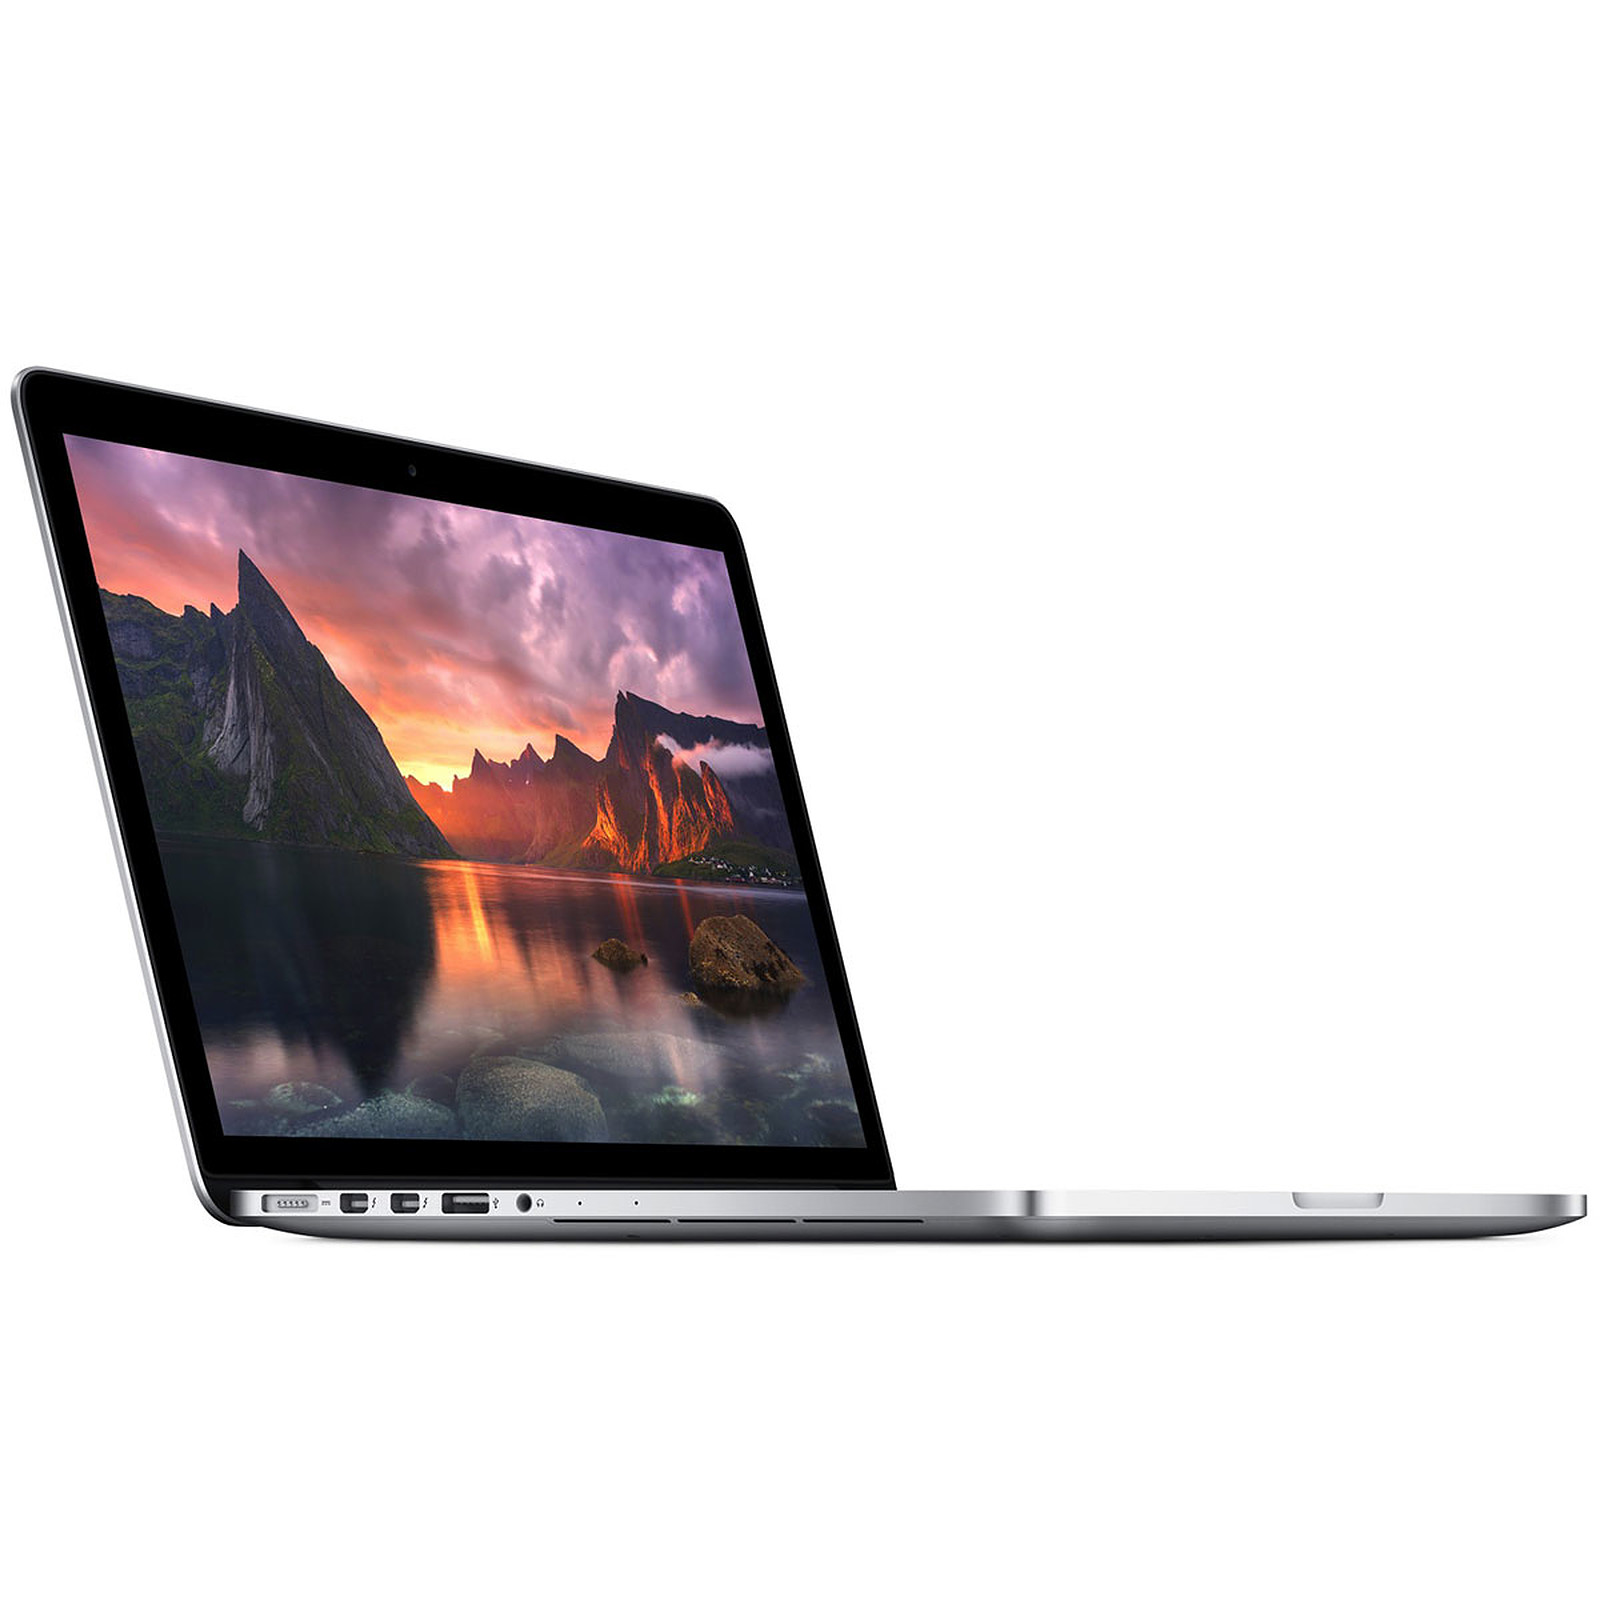 Teхника Apple - MacBook - Срочный ремонт MacBook Pro 17"(A1297)